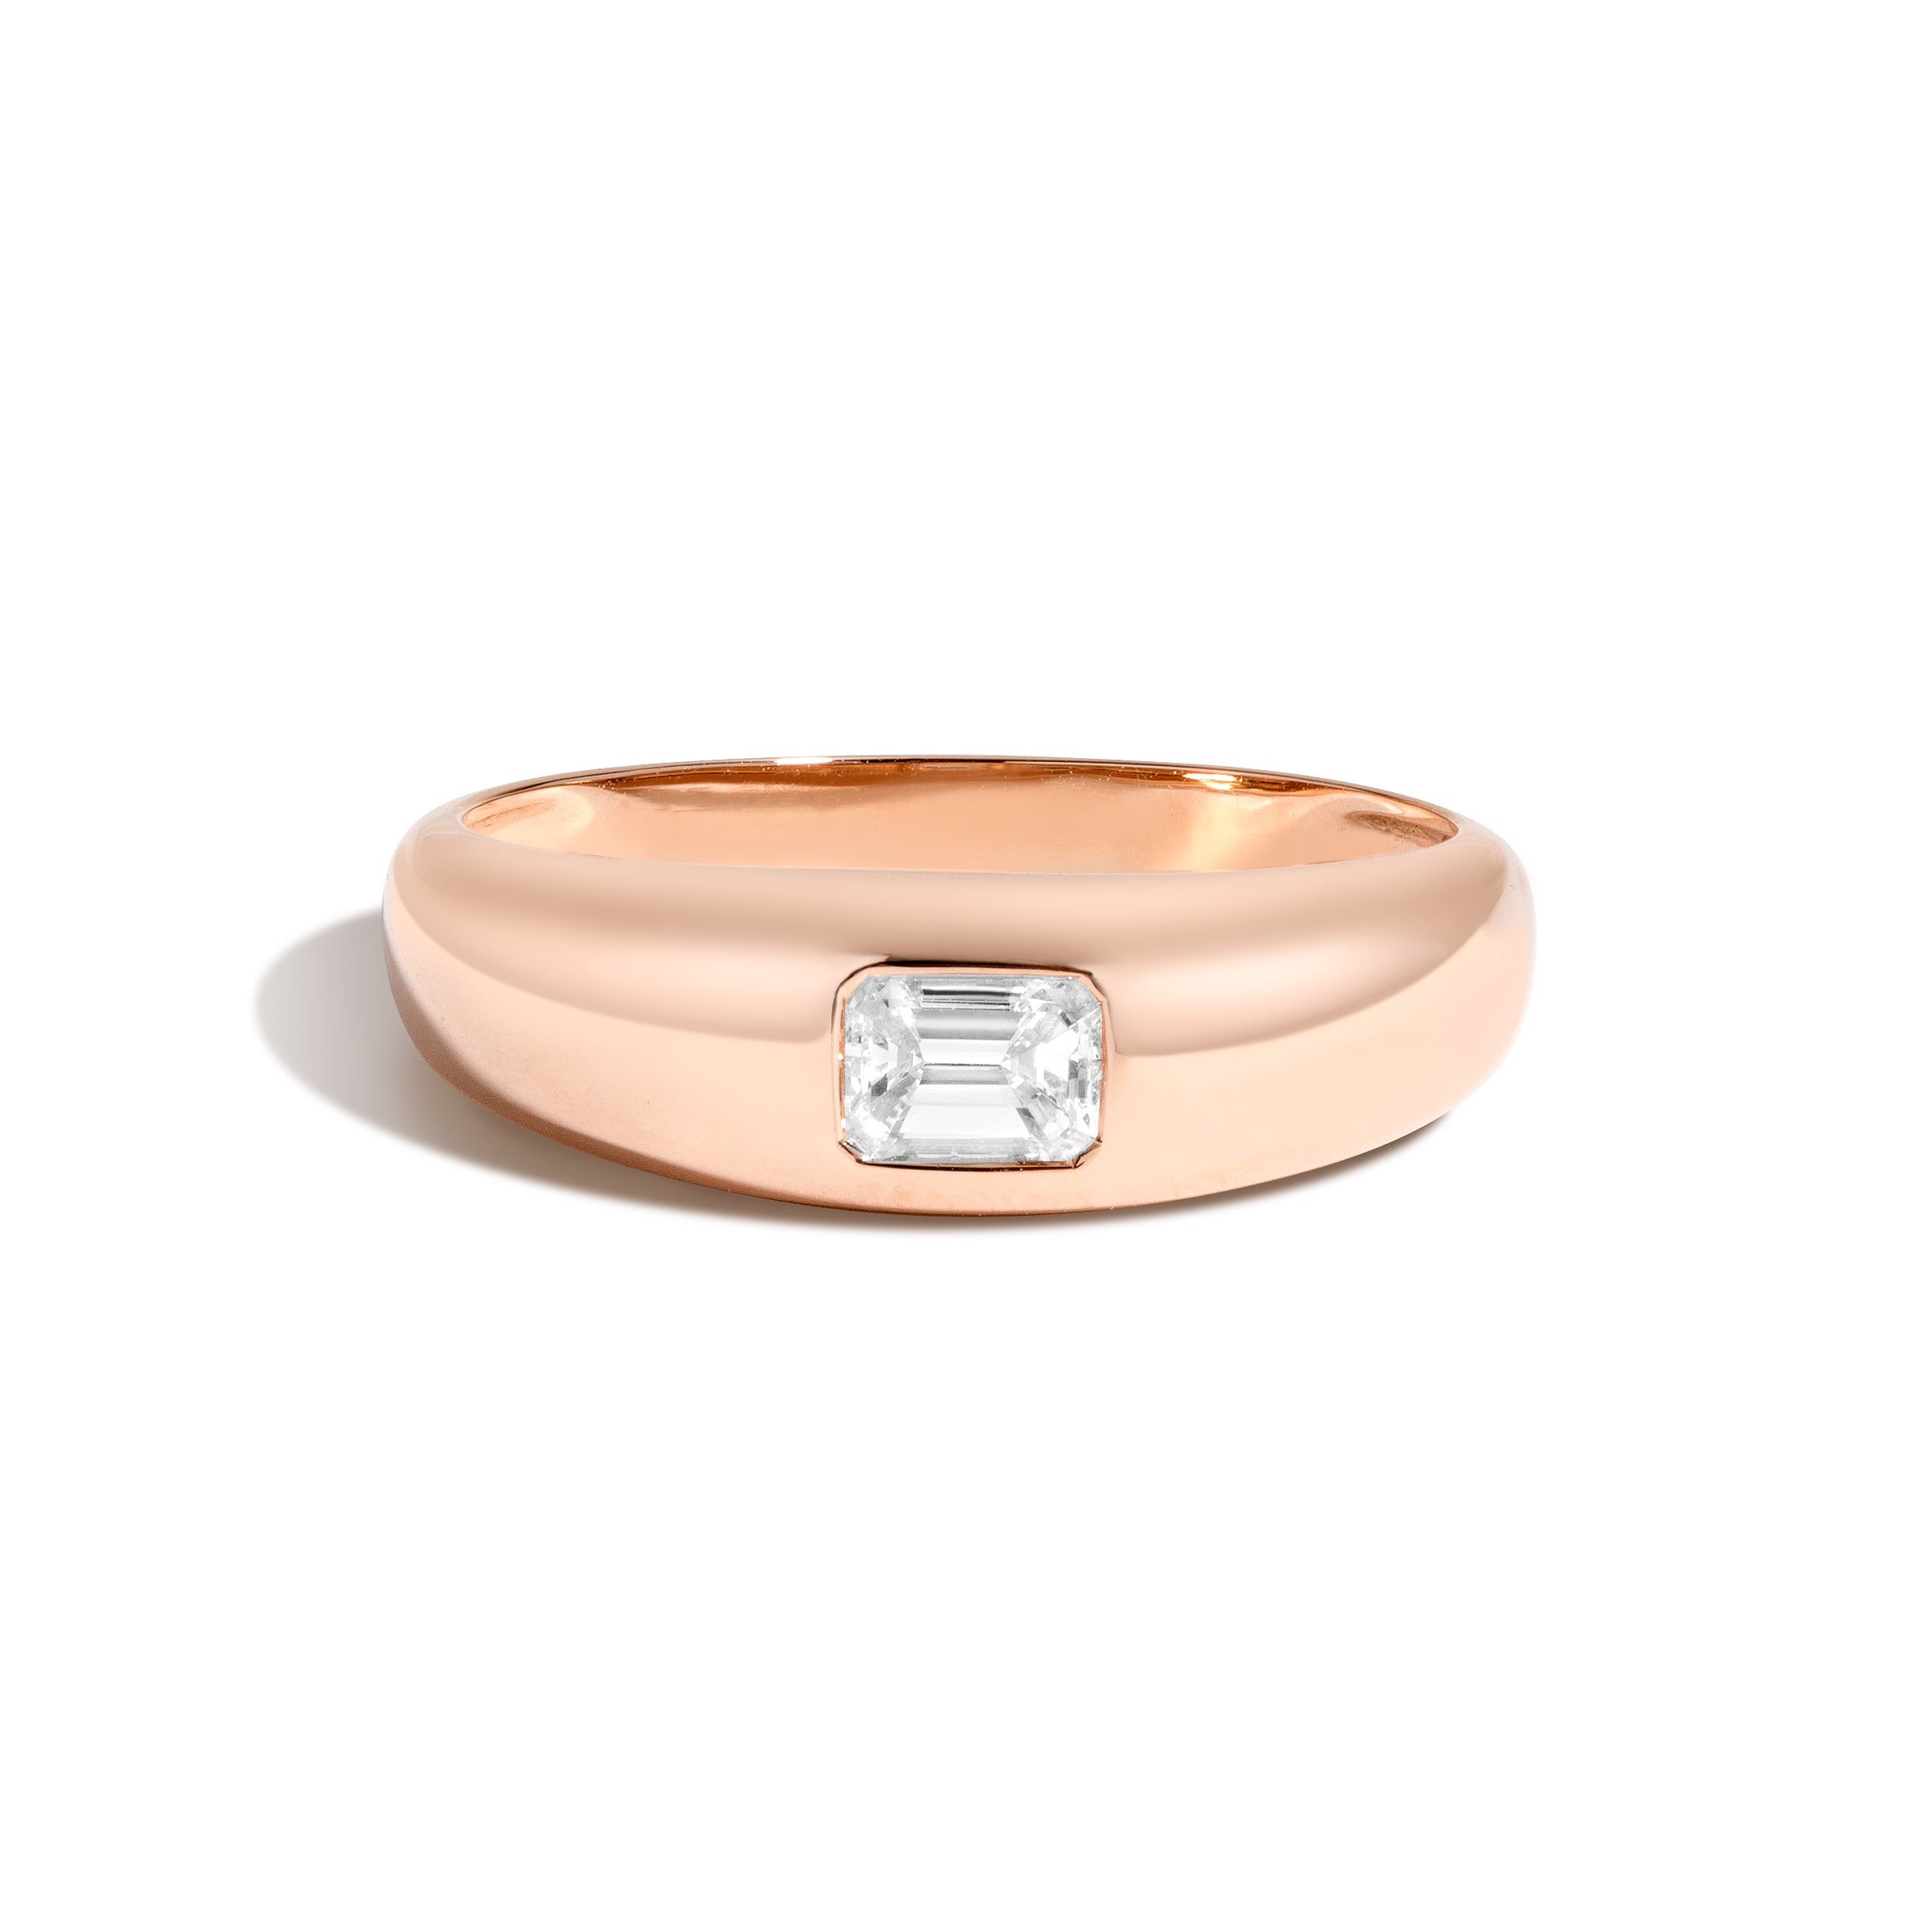 Shahla Karimi Bombe Ring with Emerald Cut 14K Rose Gold